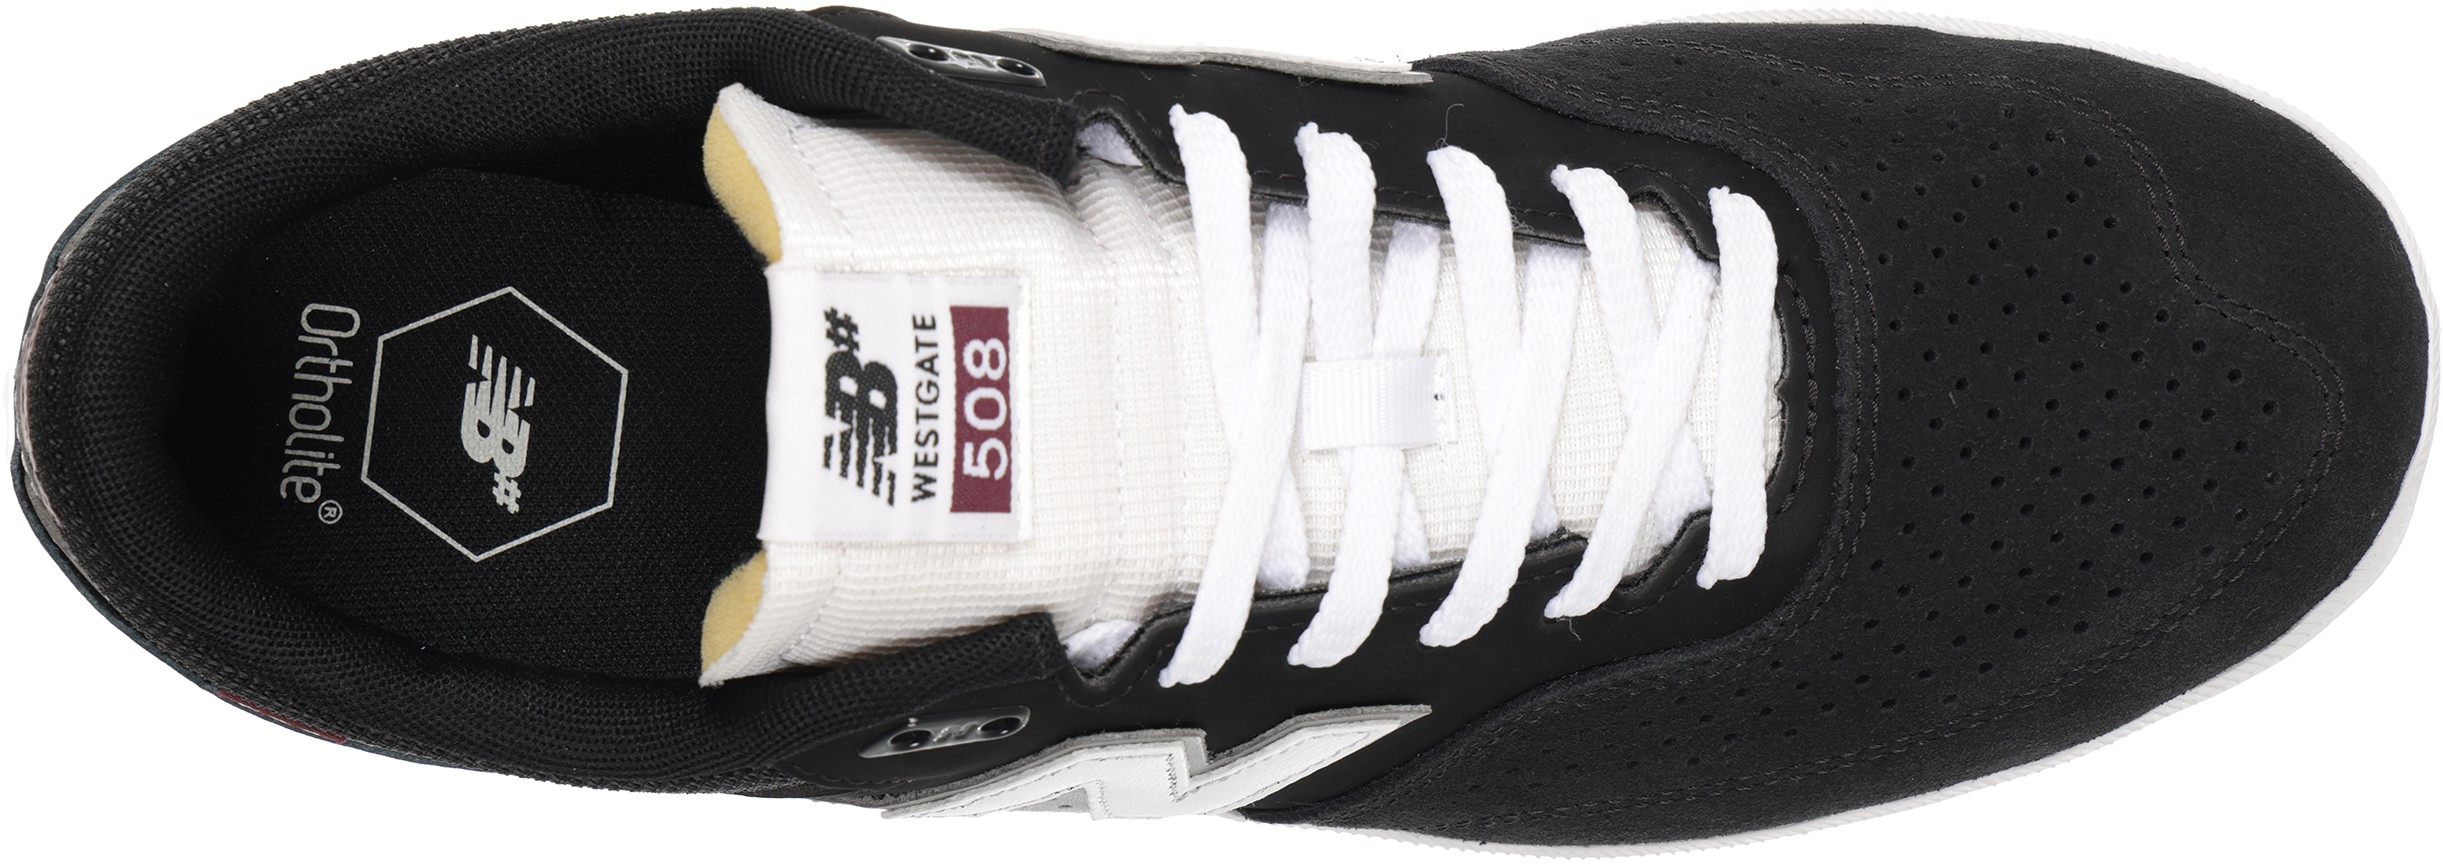 New Balance Numeric 508 Brandon Westgate Skate Shoes - black/white ...